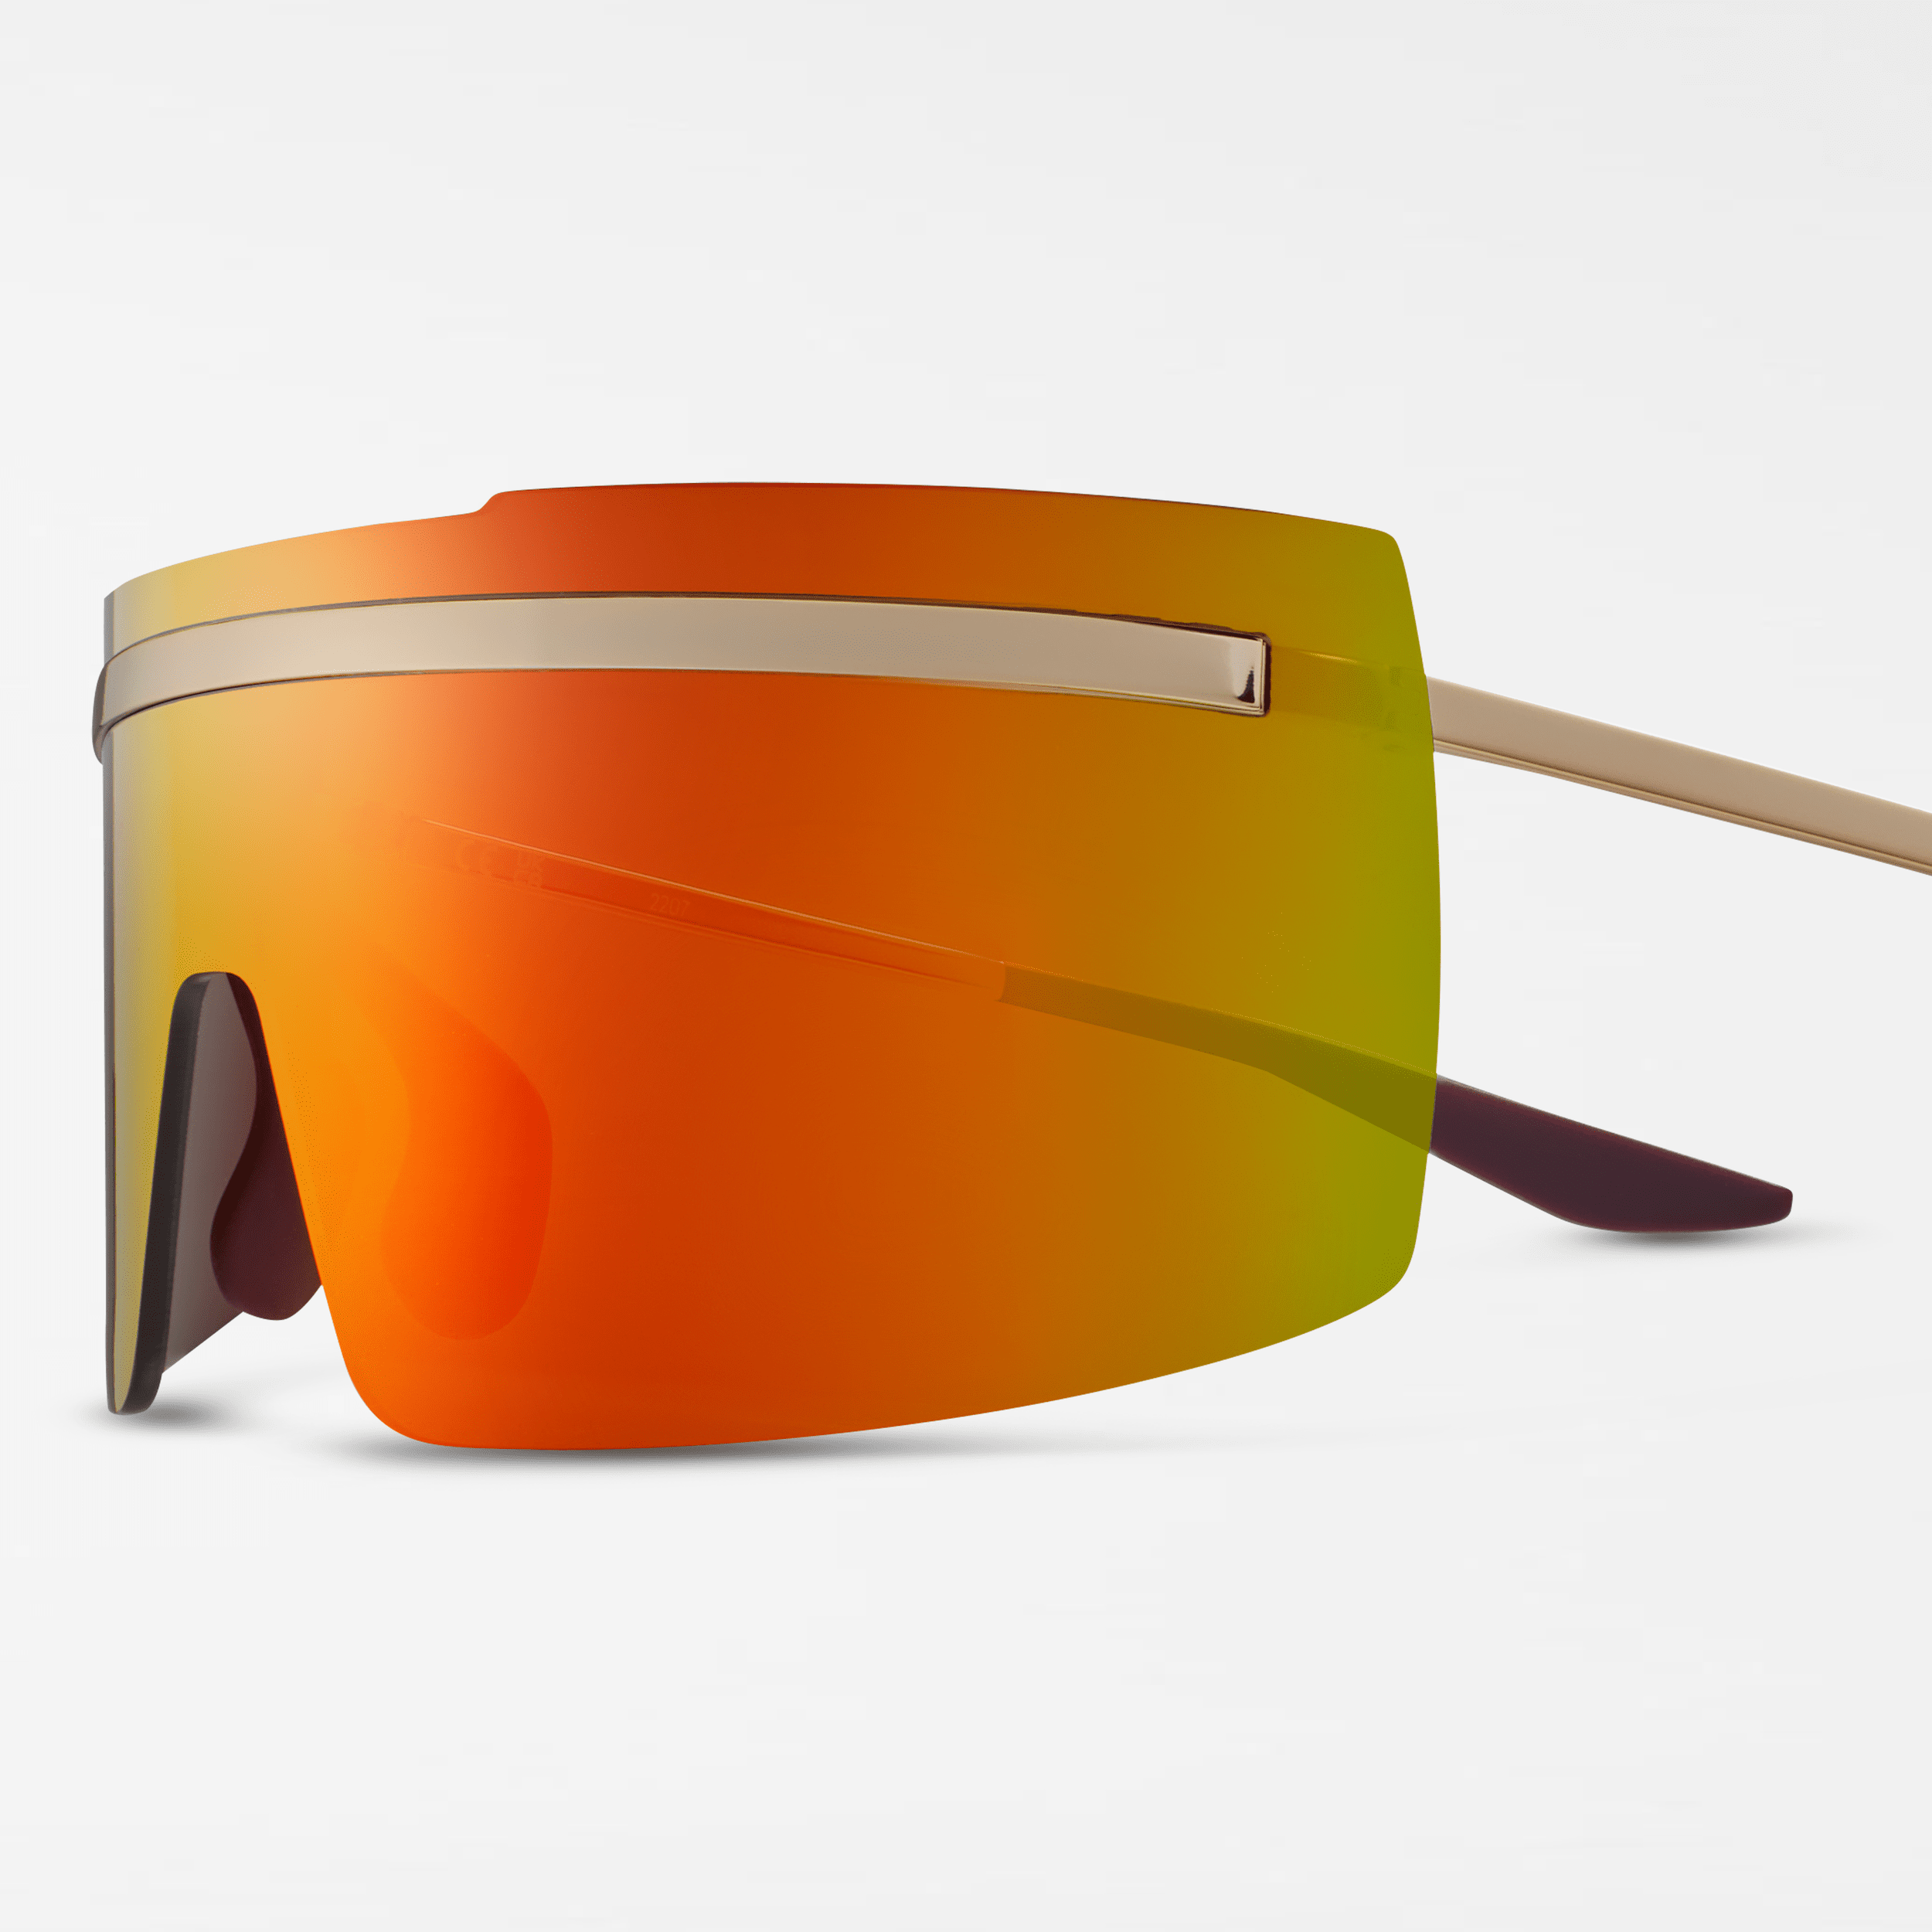 Nike Unisex Echo Shield Mirrored Sunglasses In Brown